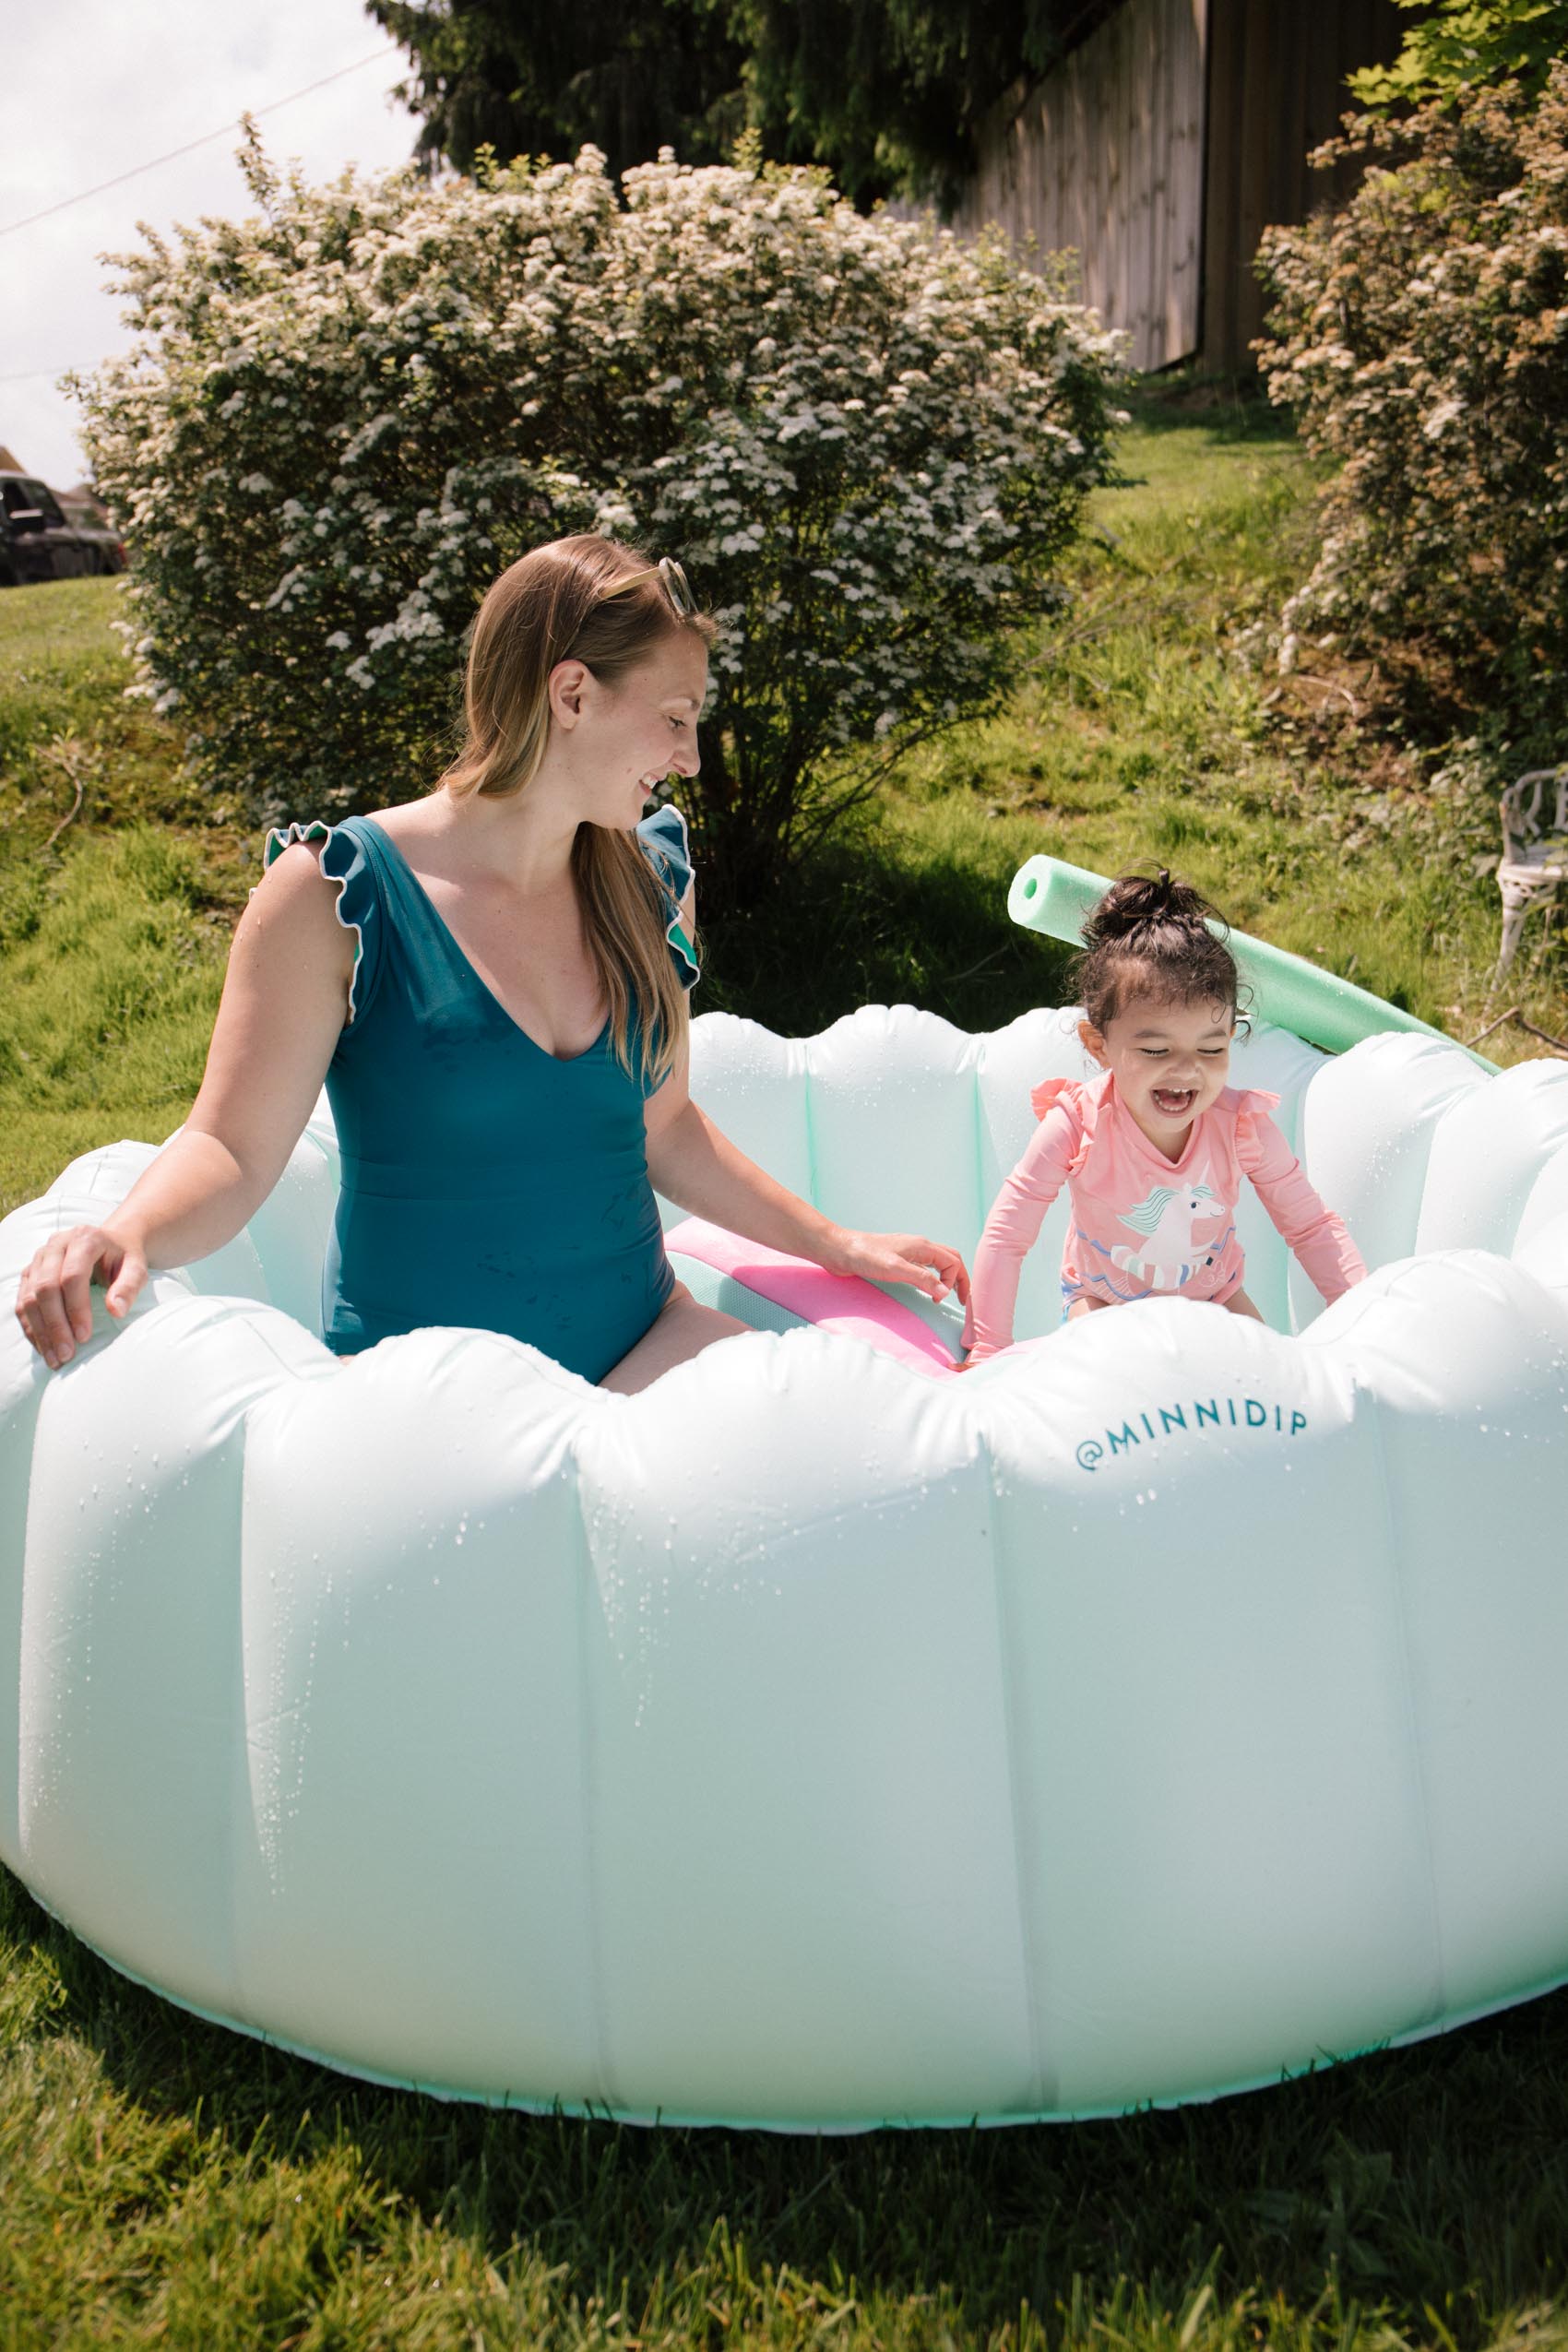 Minnidip inflatable pool for summer backyard fun